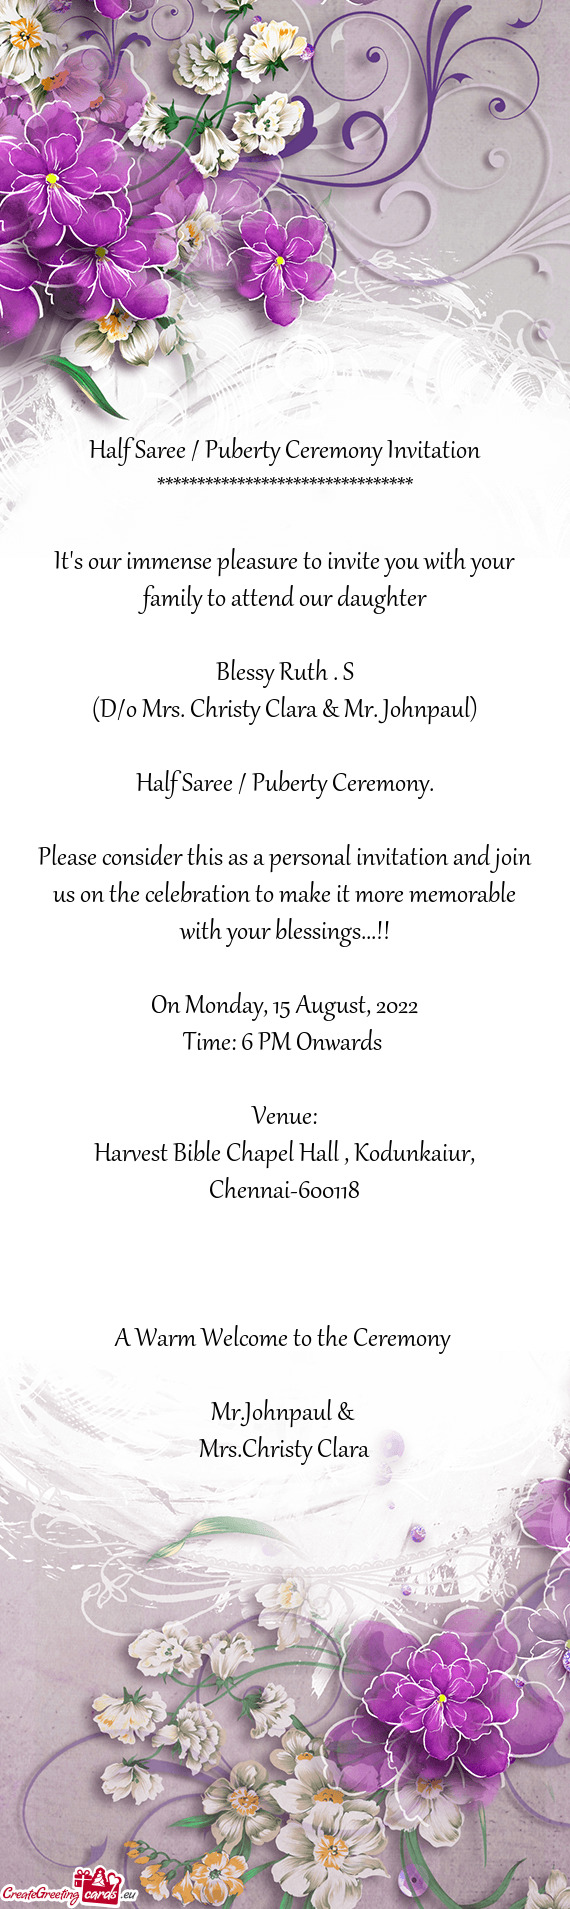 Half Saree / Puberty Ceremony Invitation